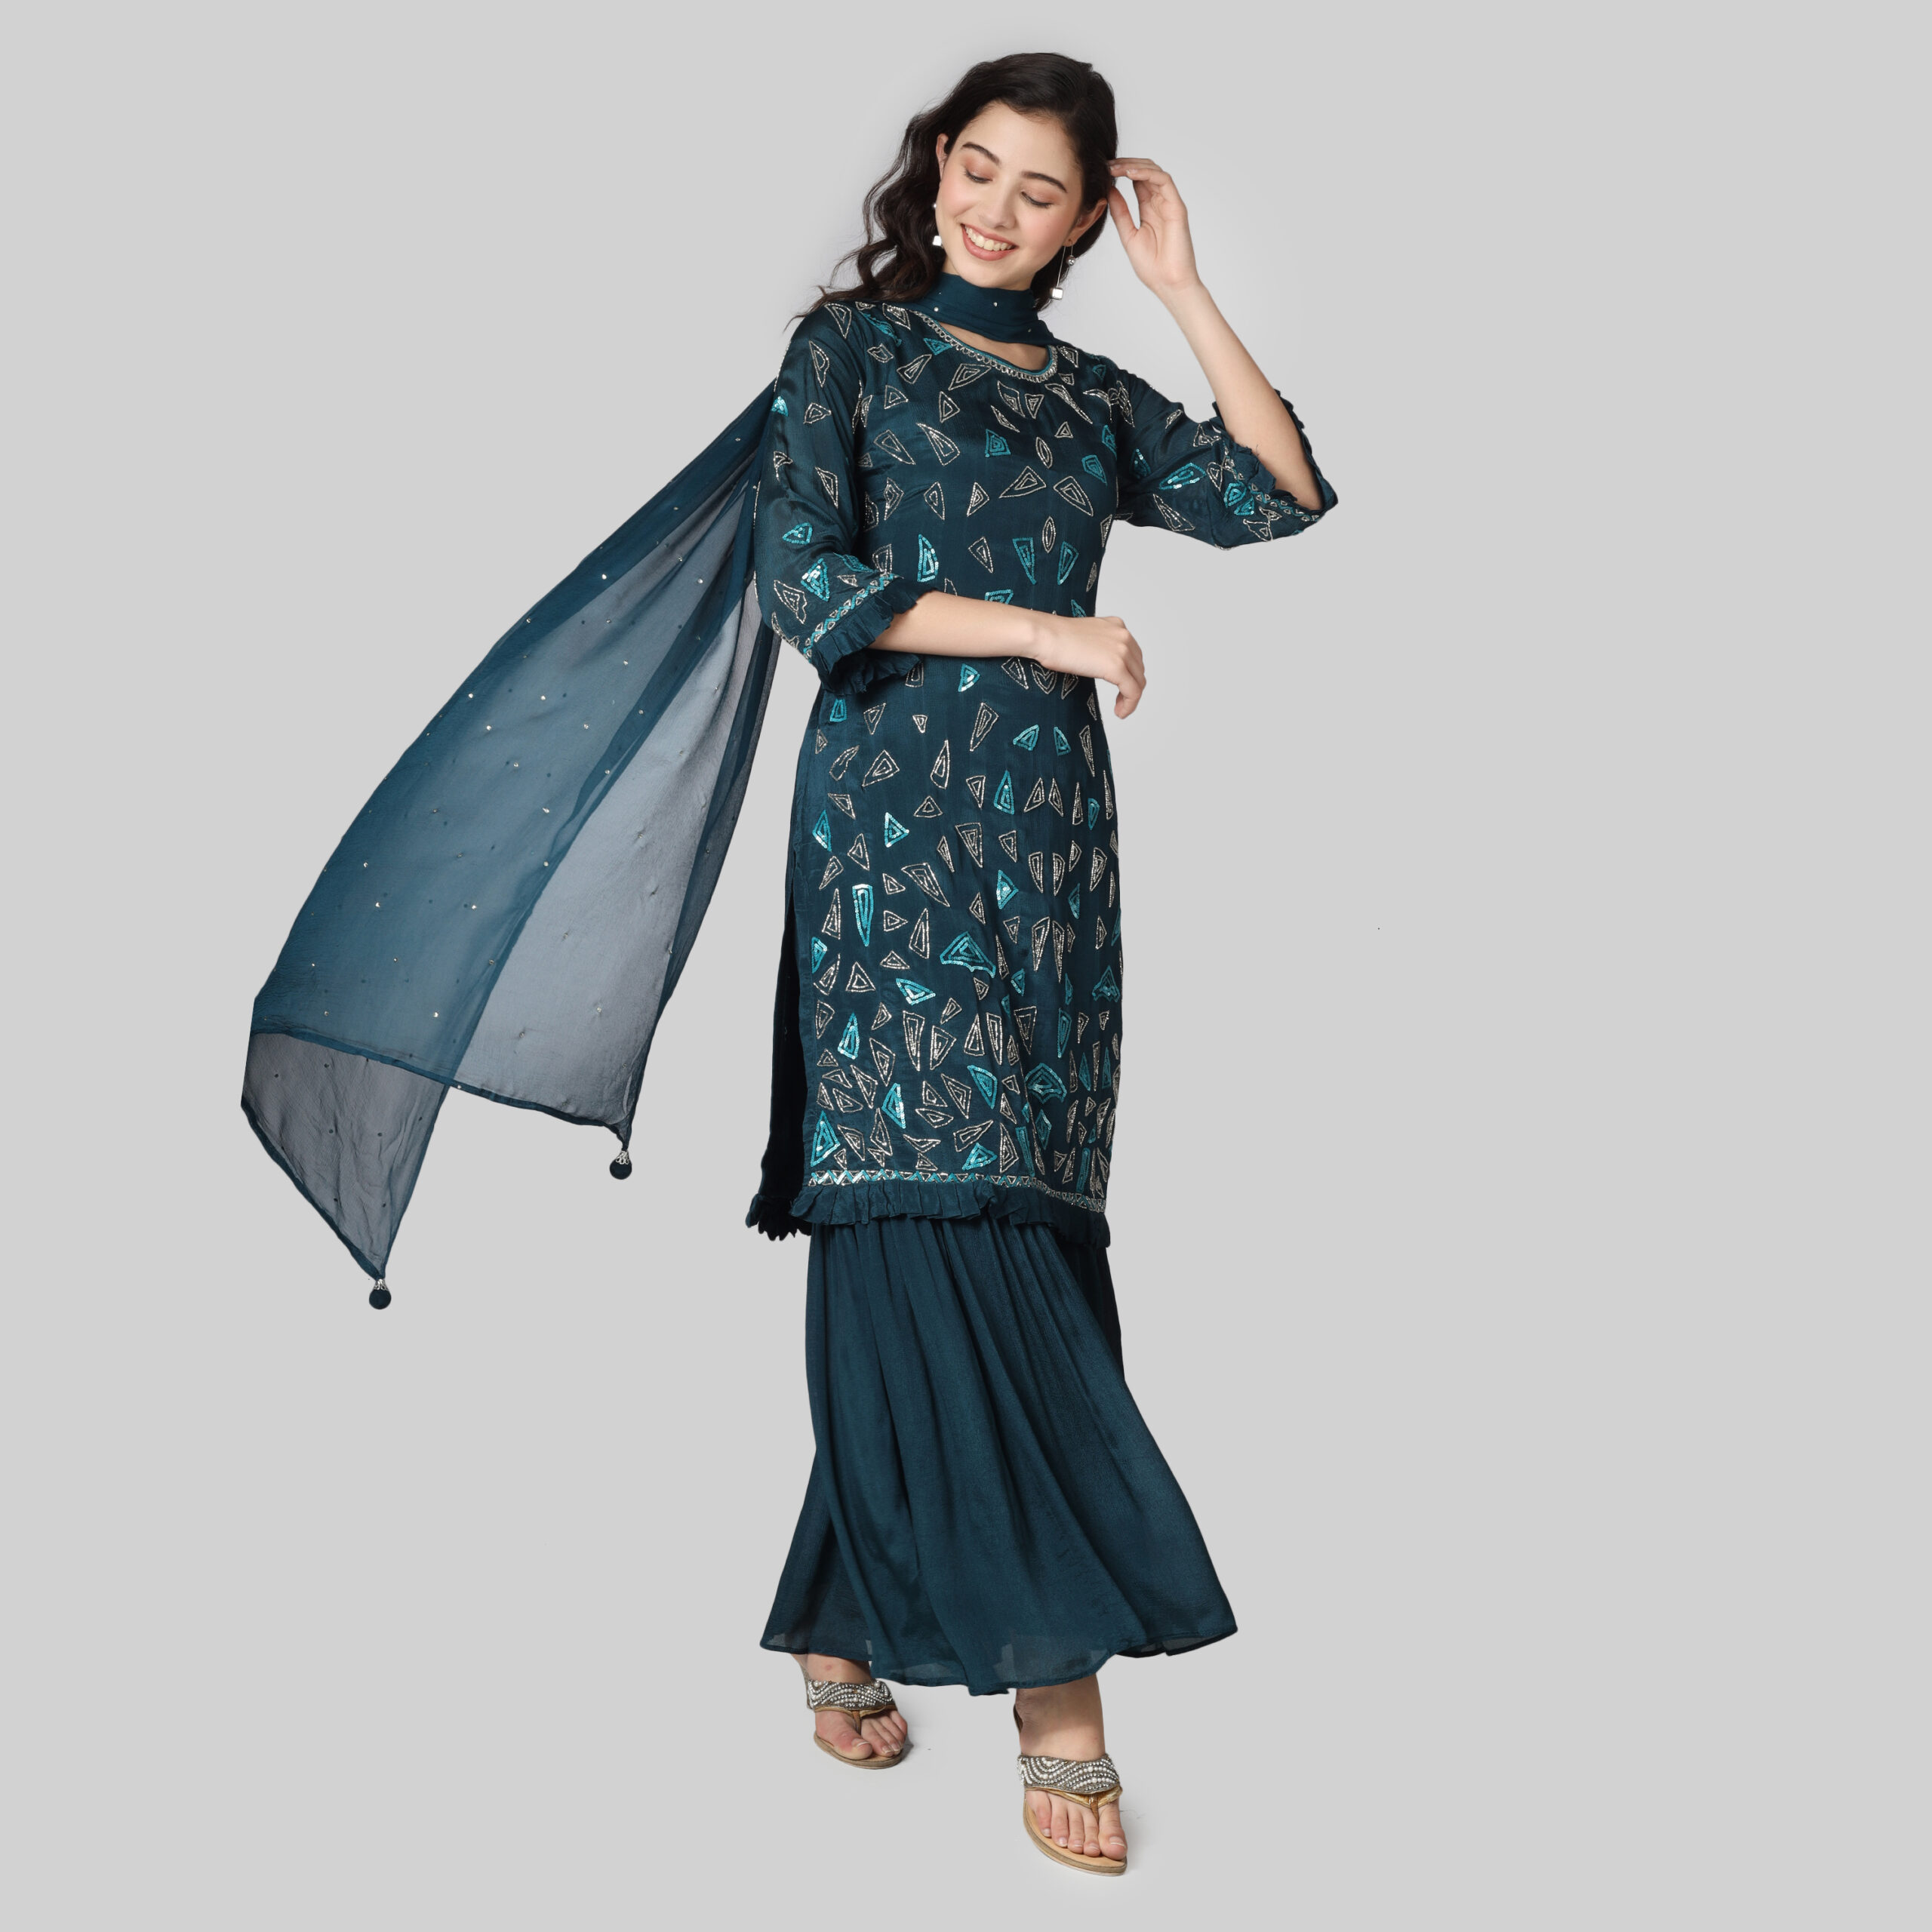 E-commerce fashion photography for Amazon, Flipkart, Myntra